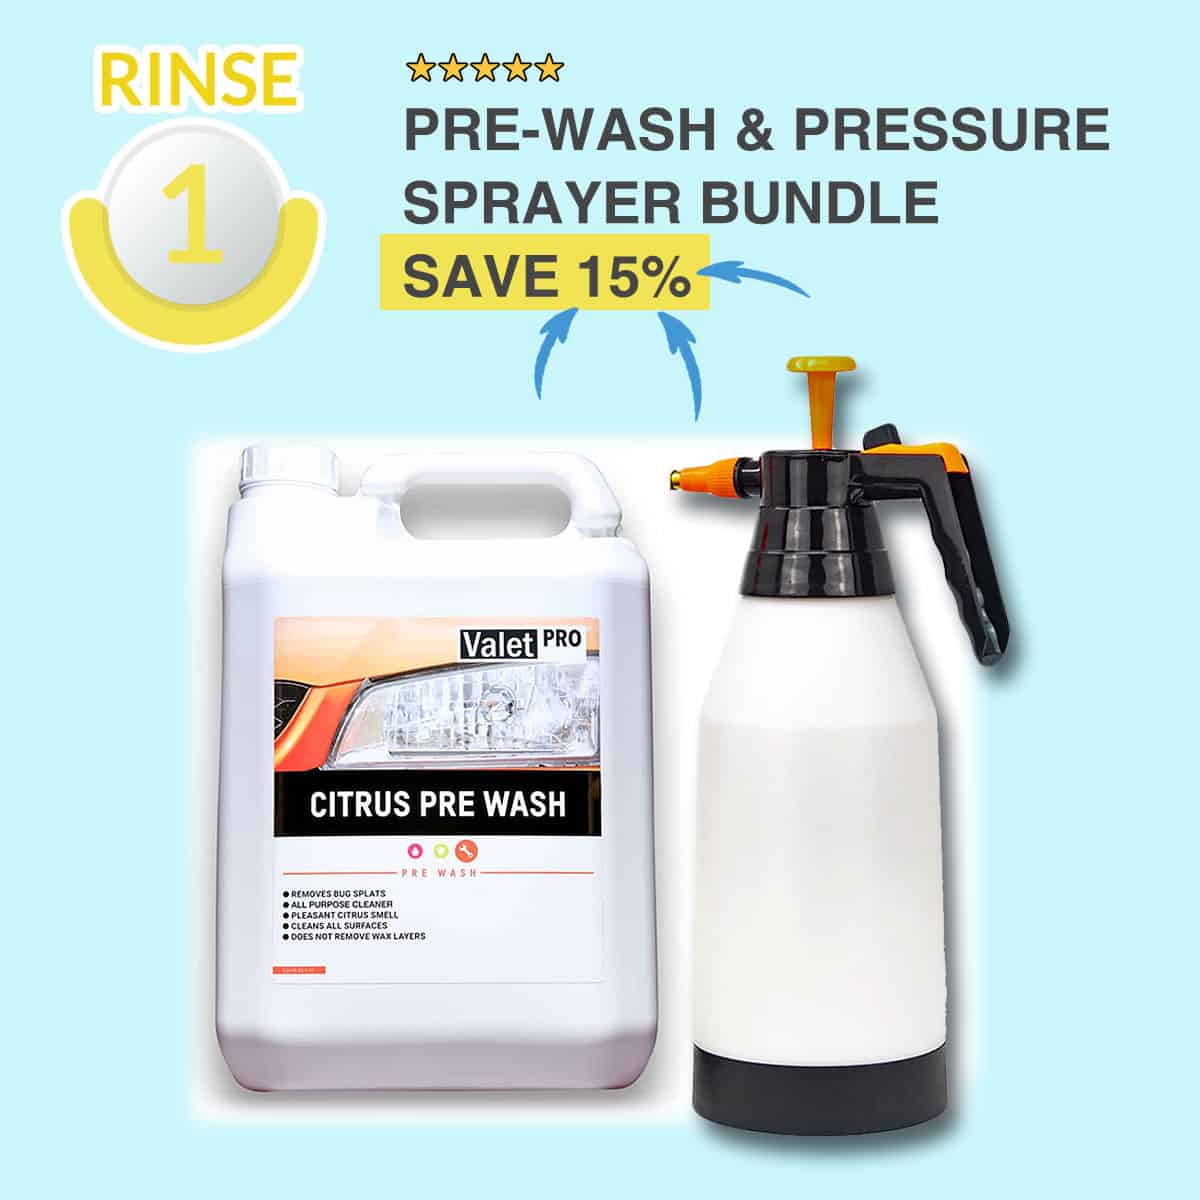 RINSE Stage Pre-wash & Pressure Sprayer Bundle